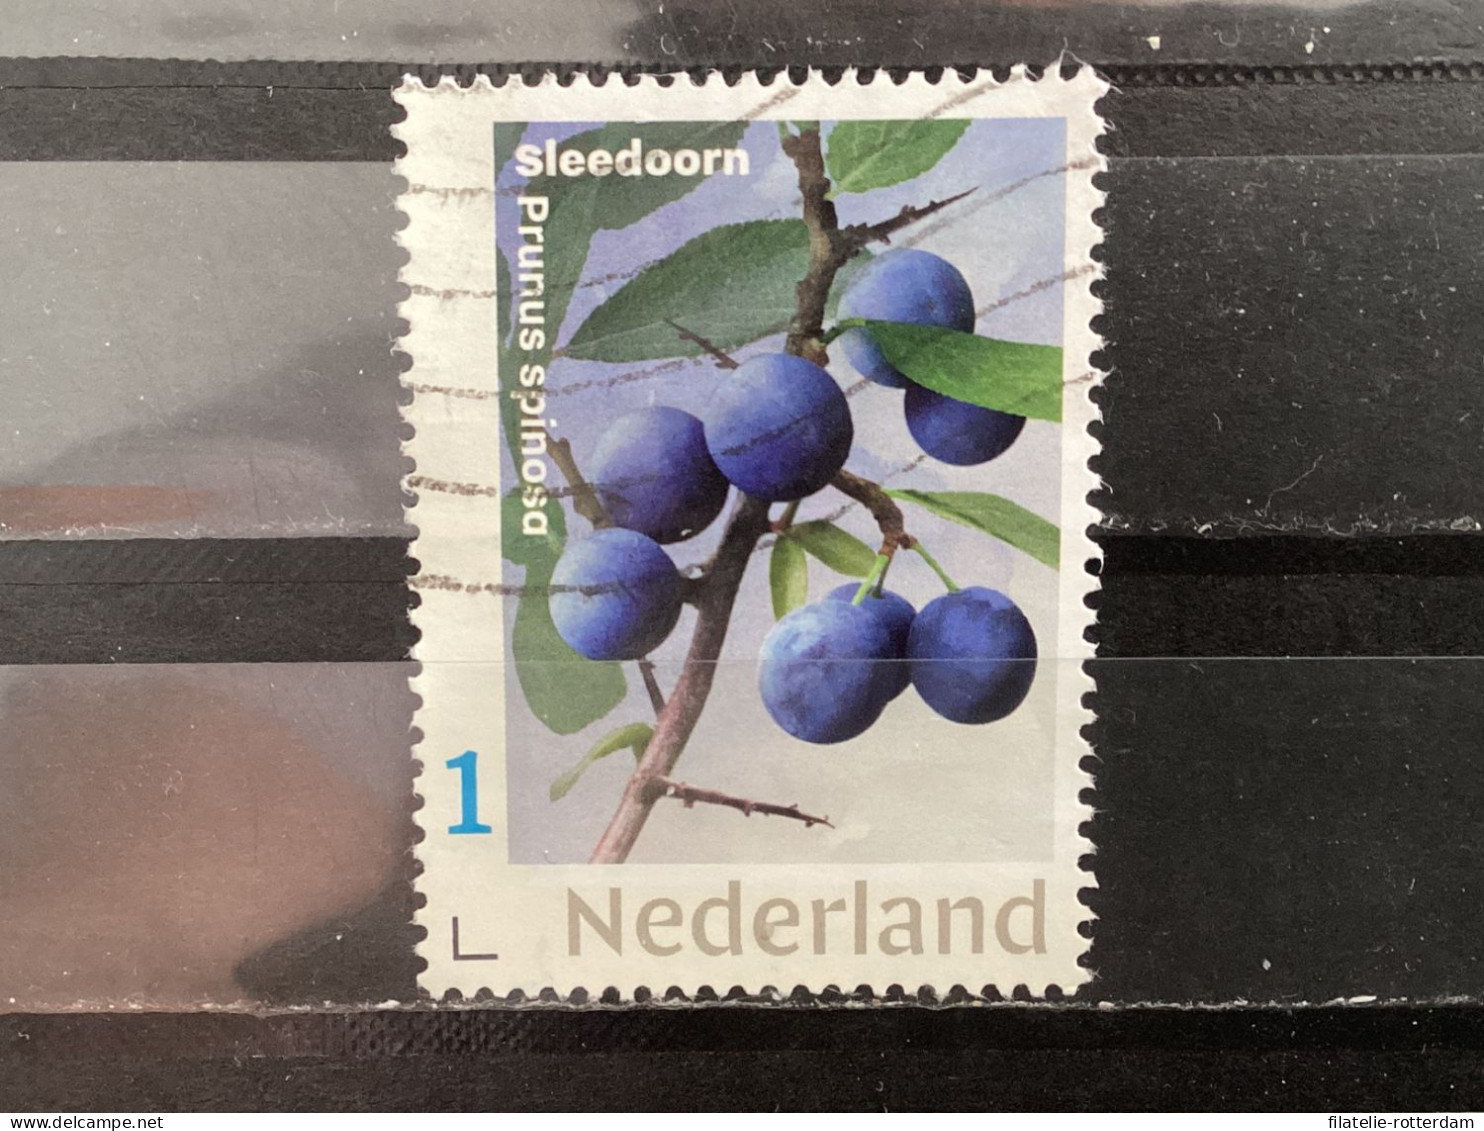 The Netherlands / Nederland - Fruit, Sleedoorn 2021 - Used Stamps